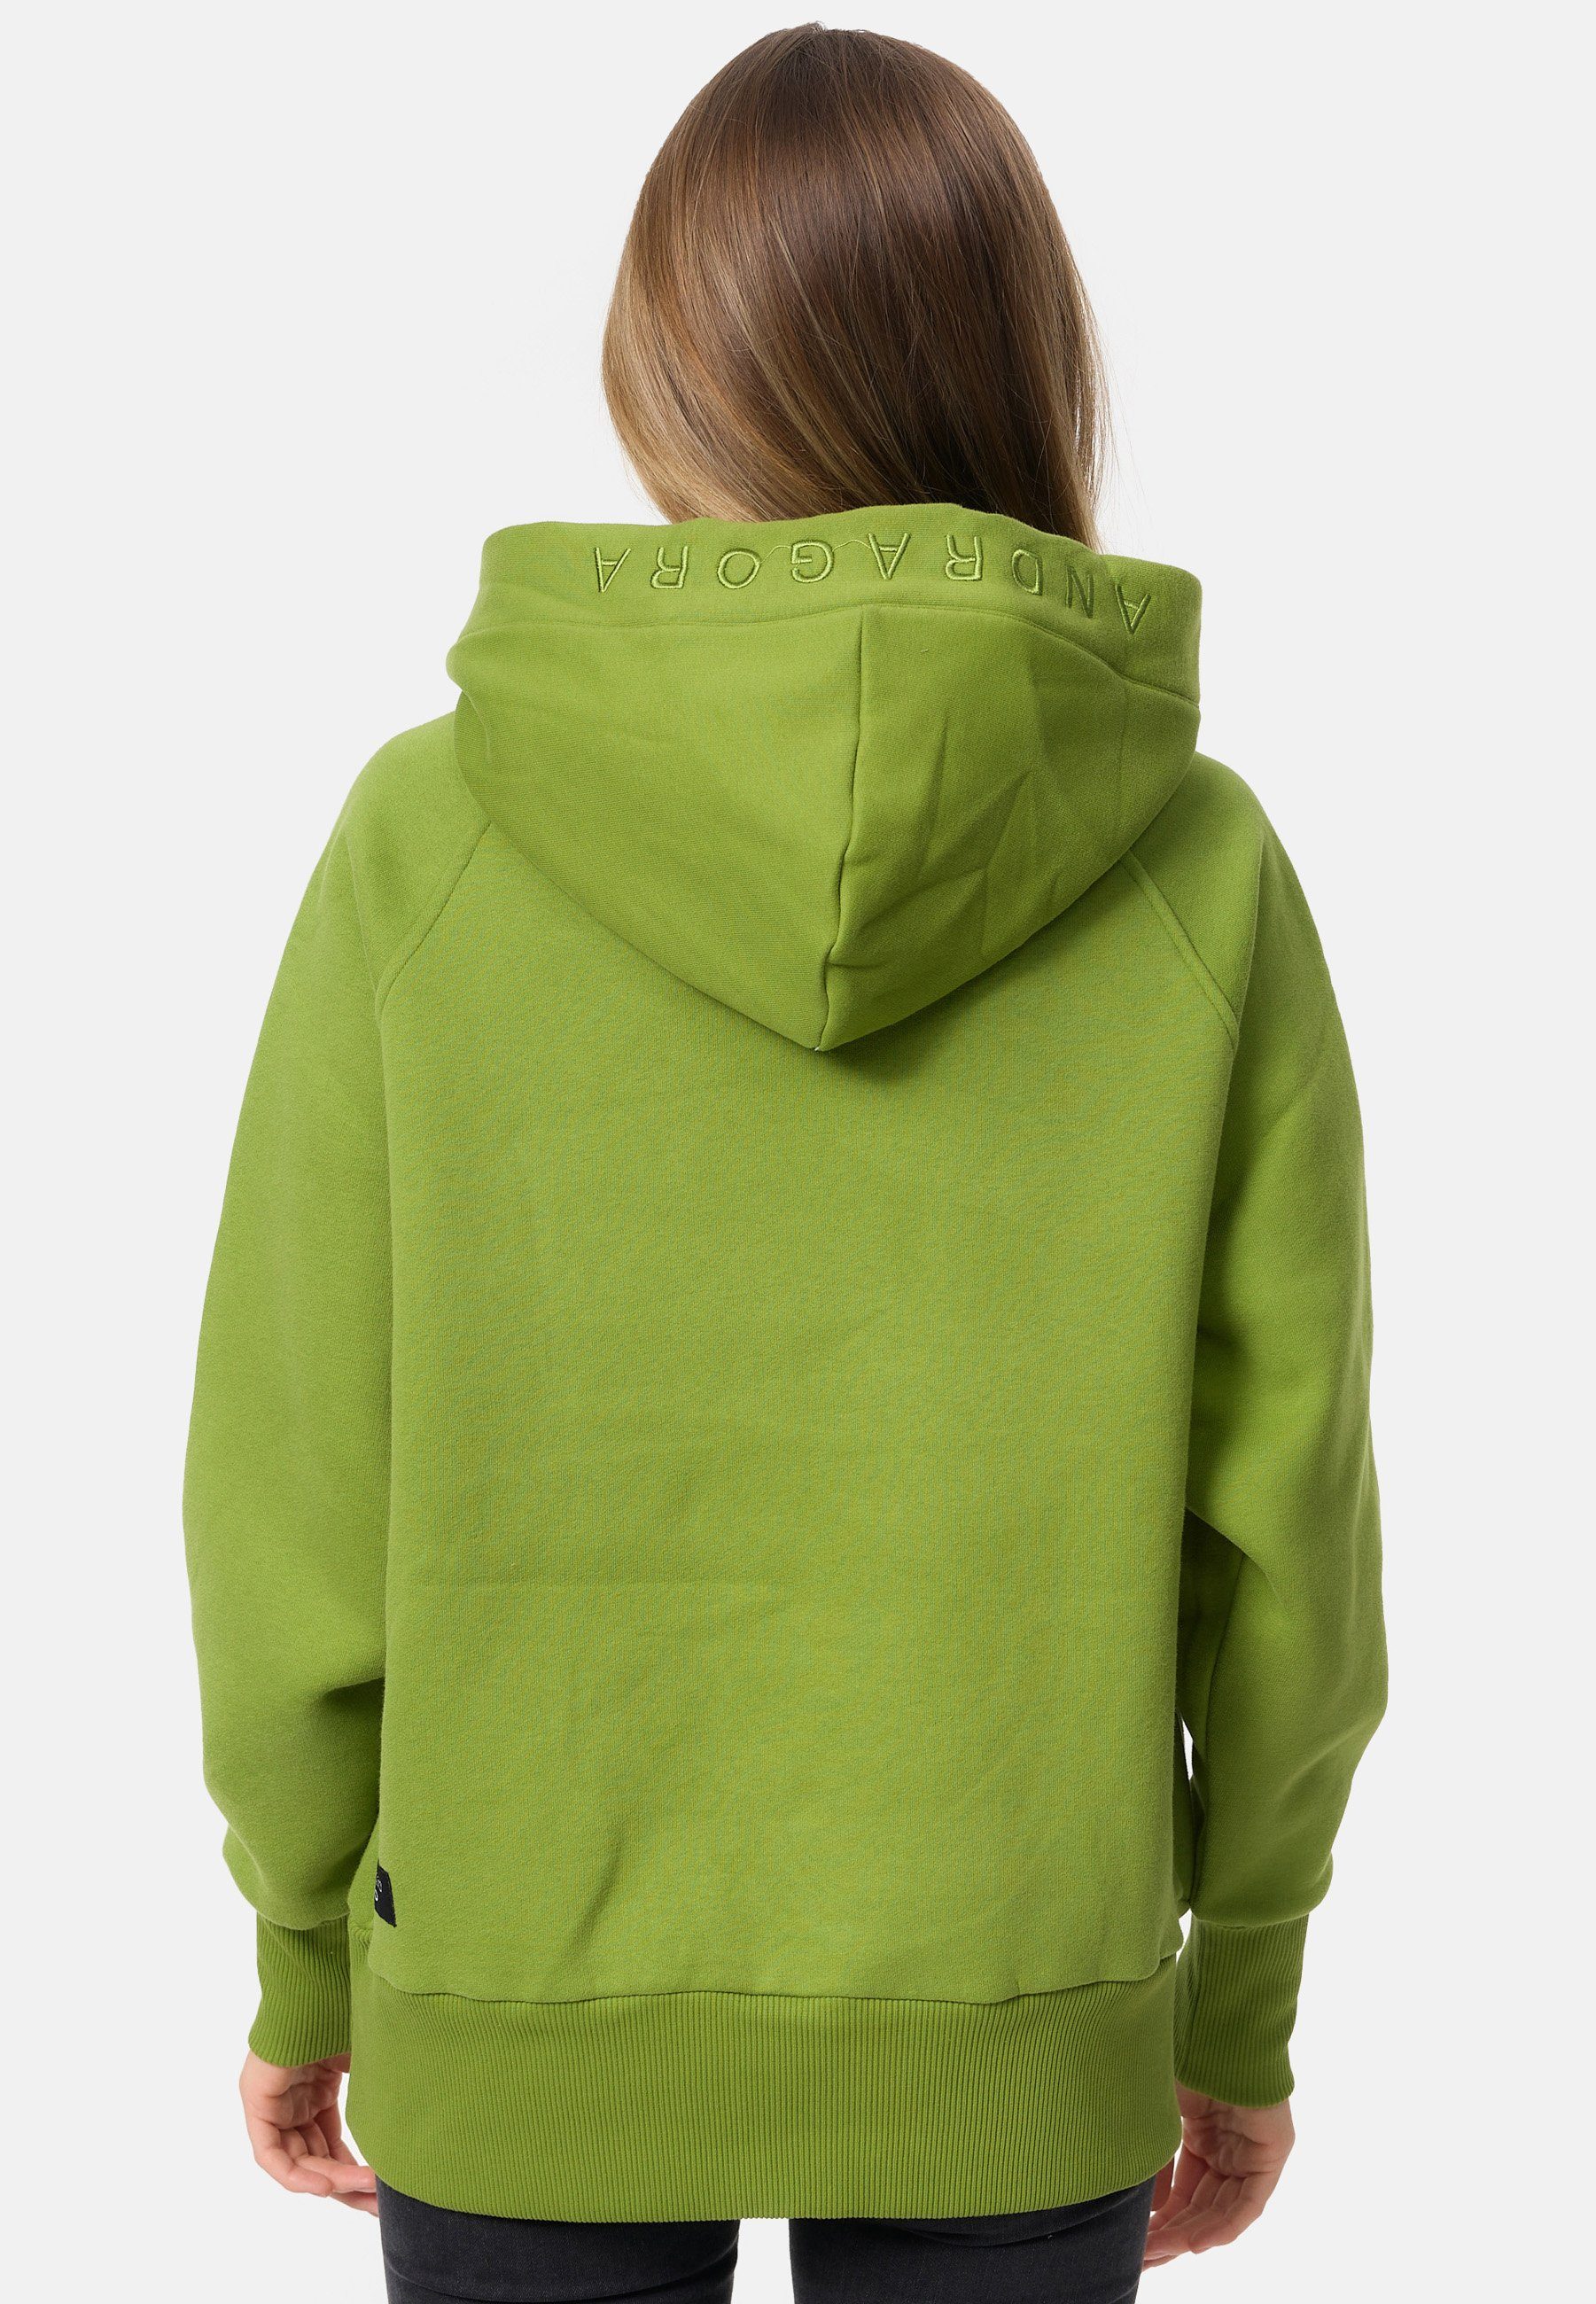 Decay Kapuzensweatshirt mit Frontprint dezentem olivgrün-grün